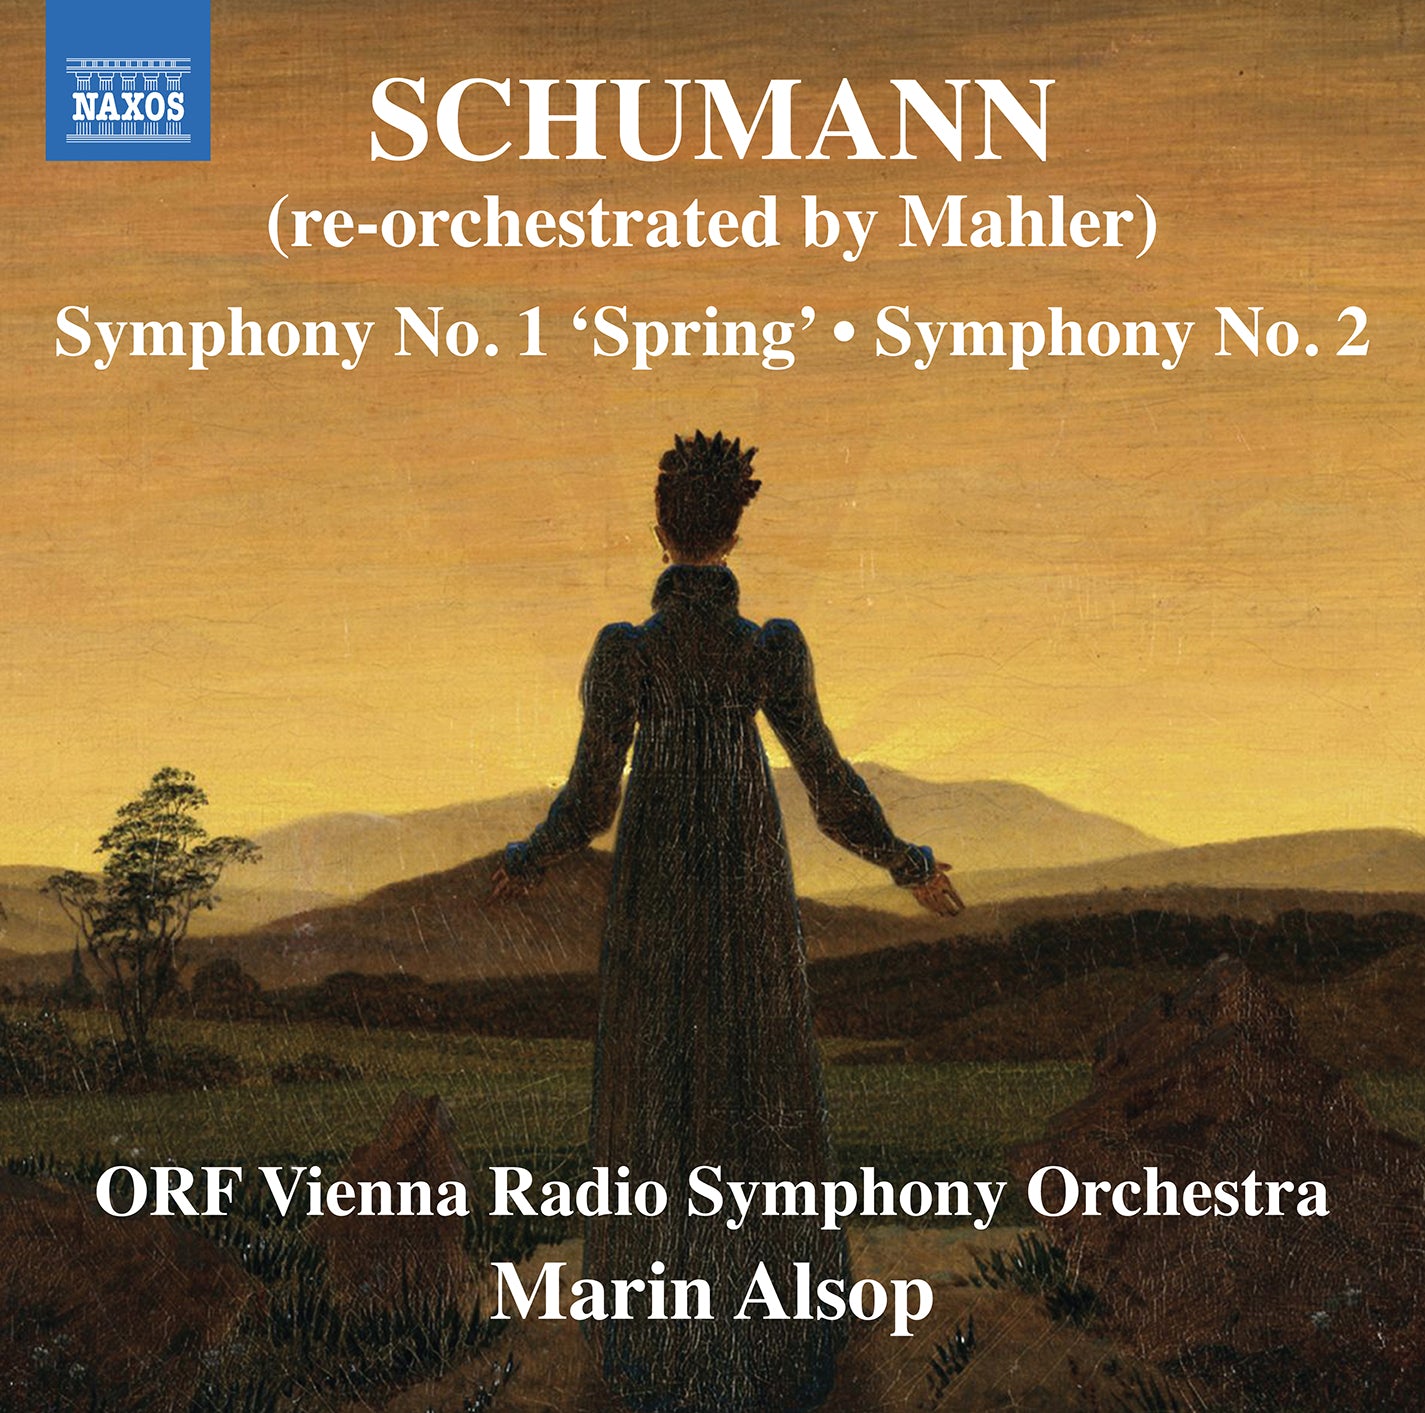 Schumann-Mahler: Symphonies Nos. 1 "Spring" & 2 / Alsop, ORF Vienna RSO